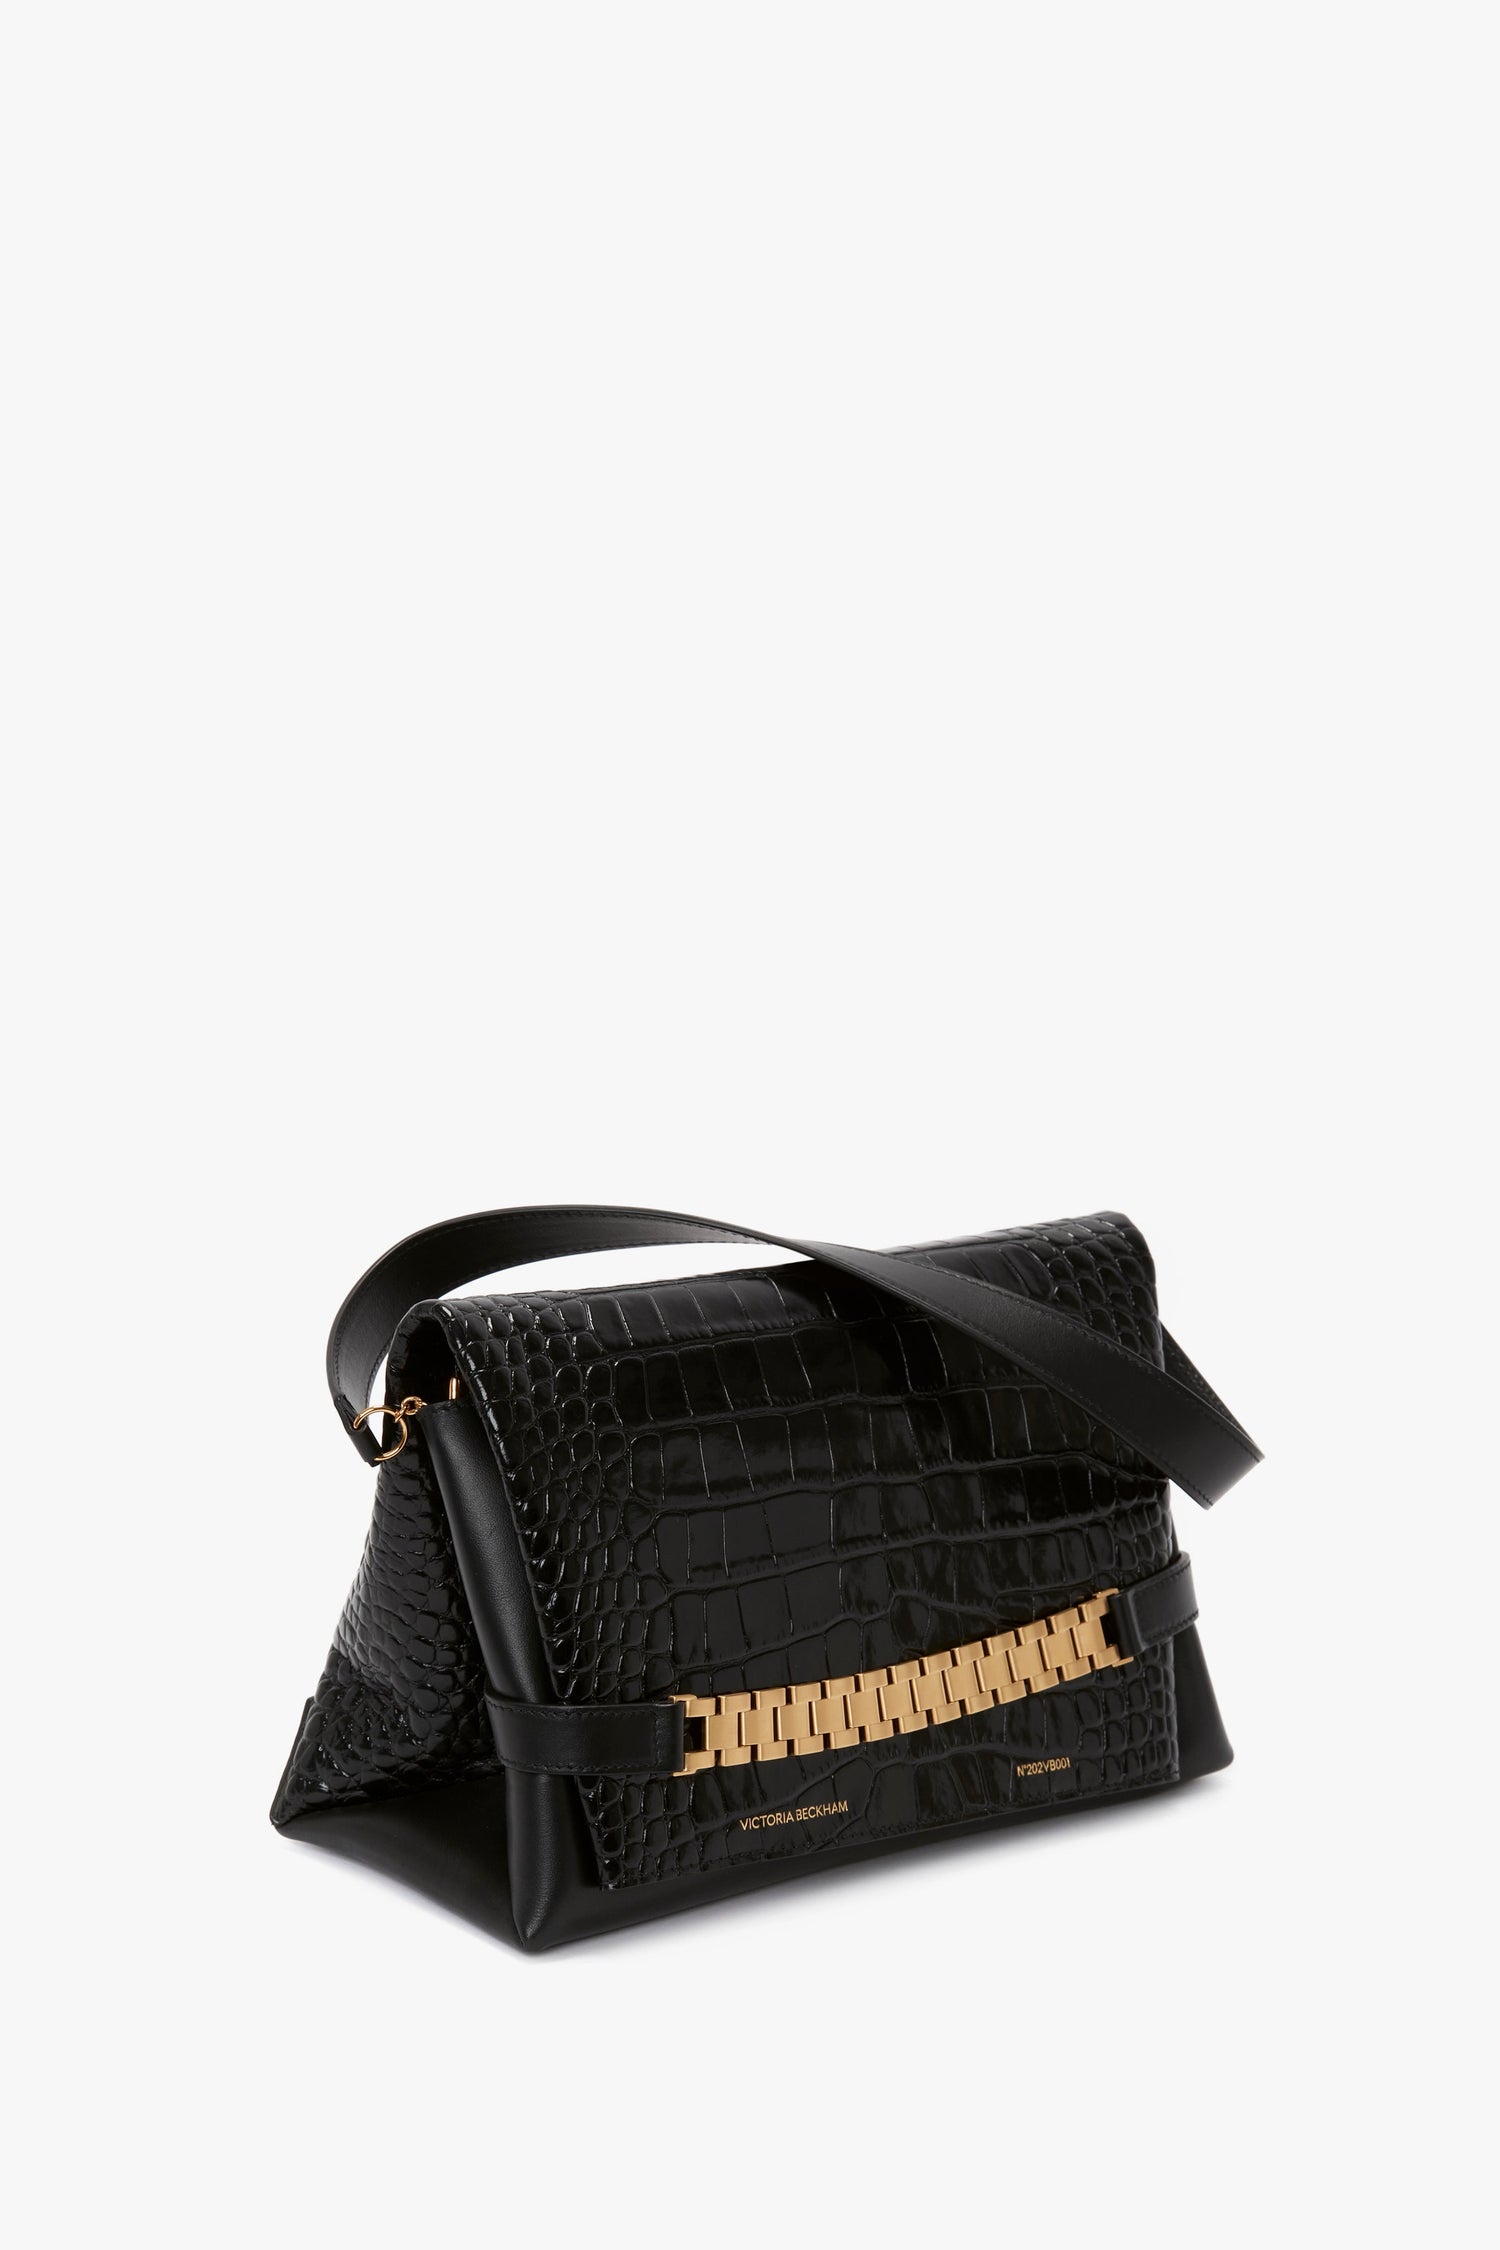 Mini Chain Leather Shoulder Bag in Black - Victoria Beckham